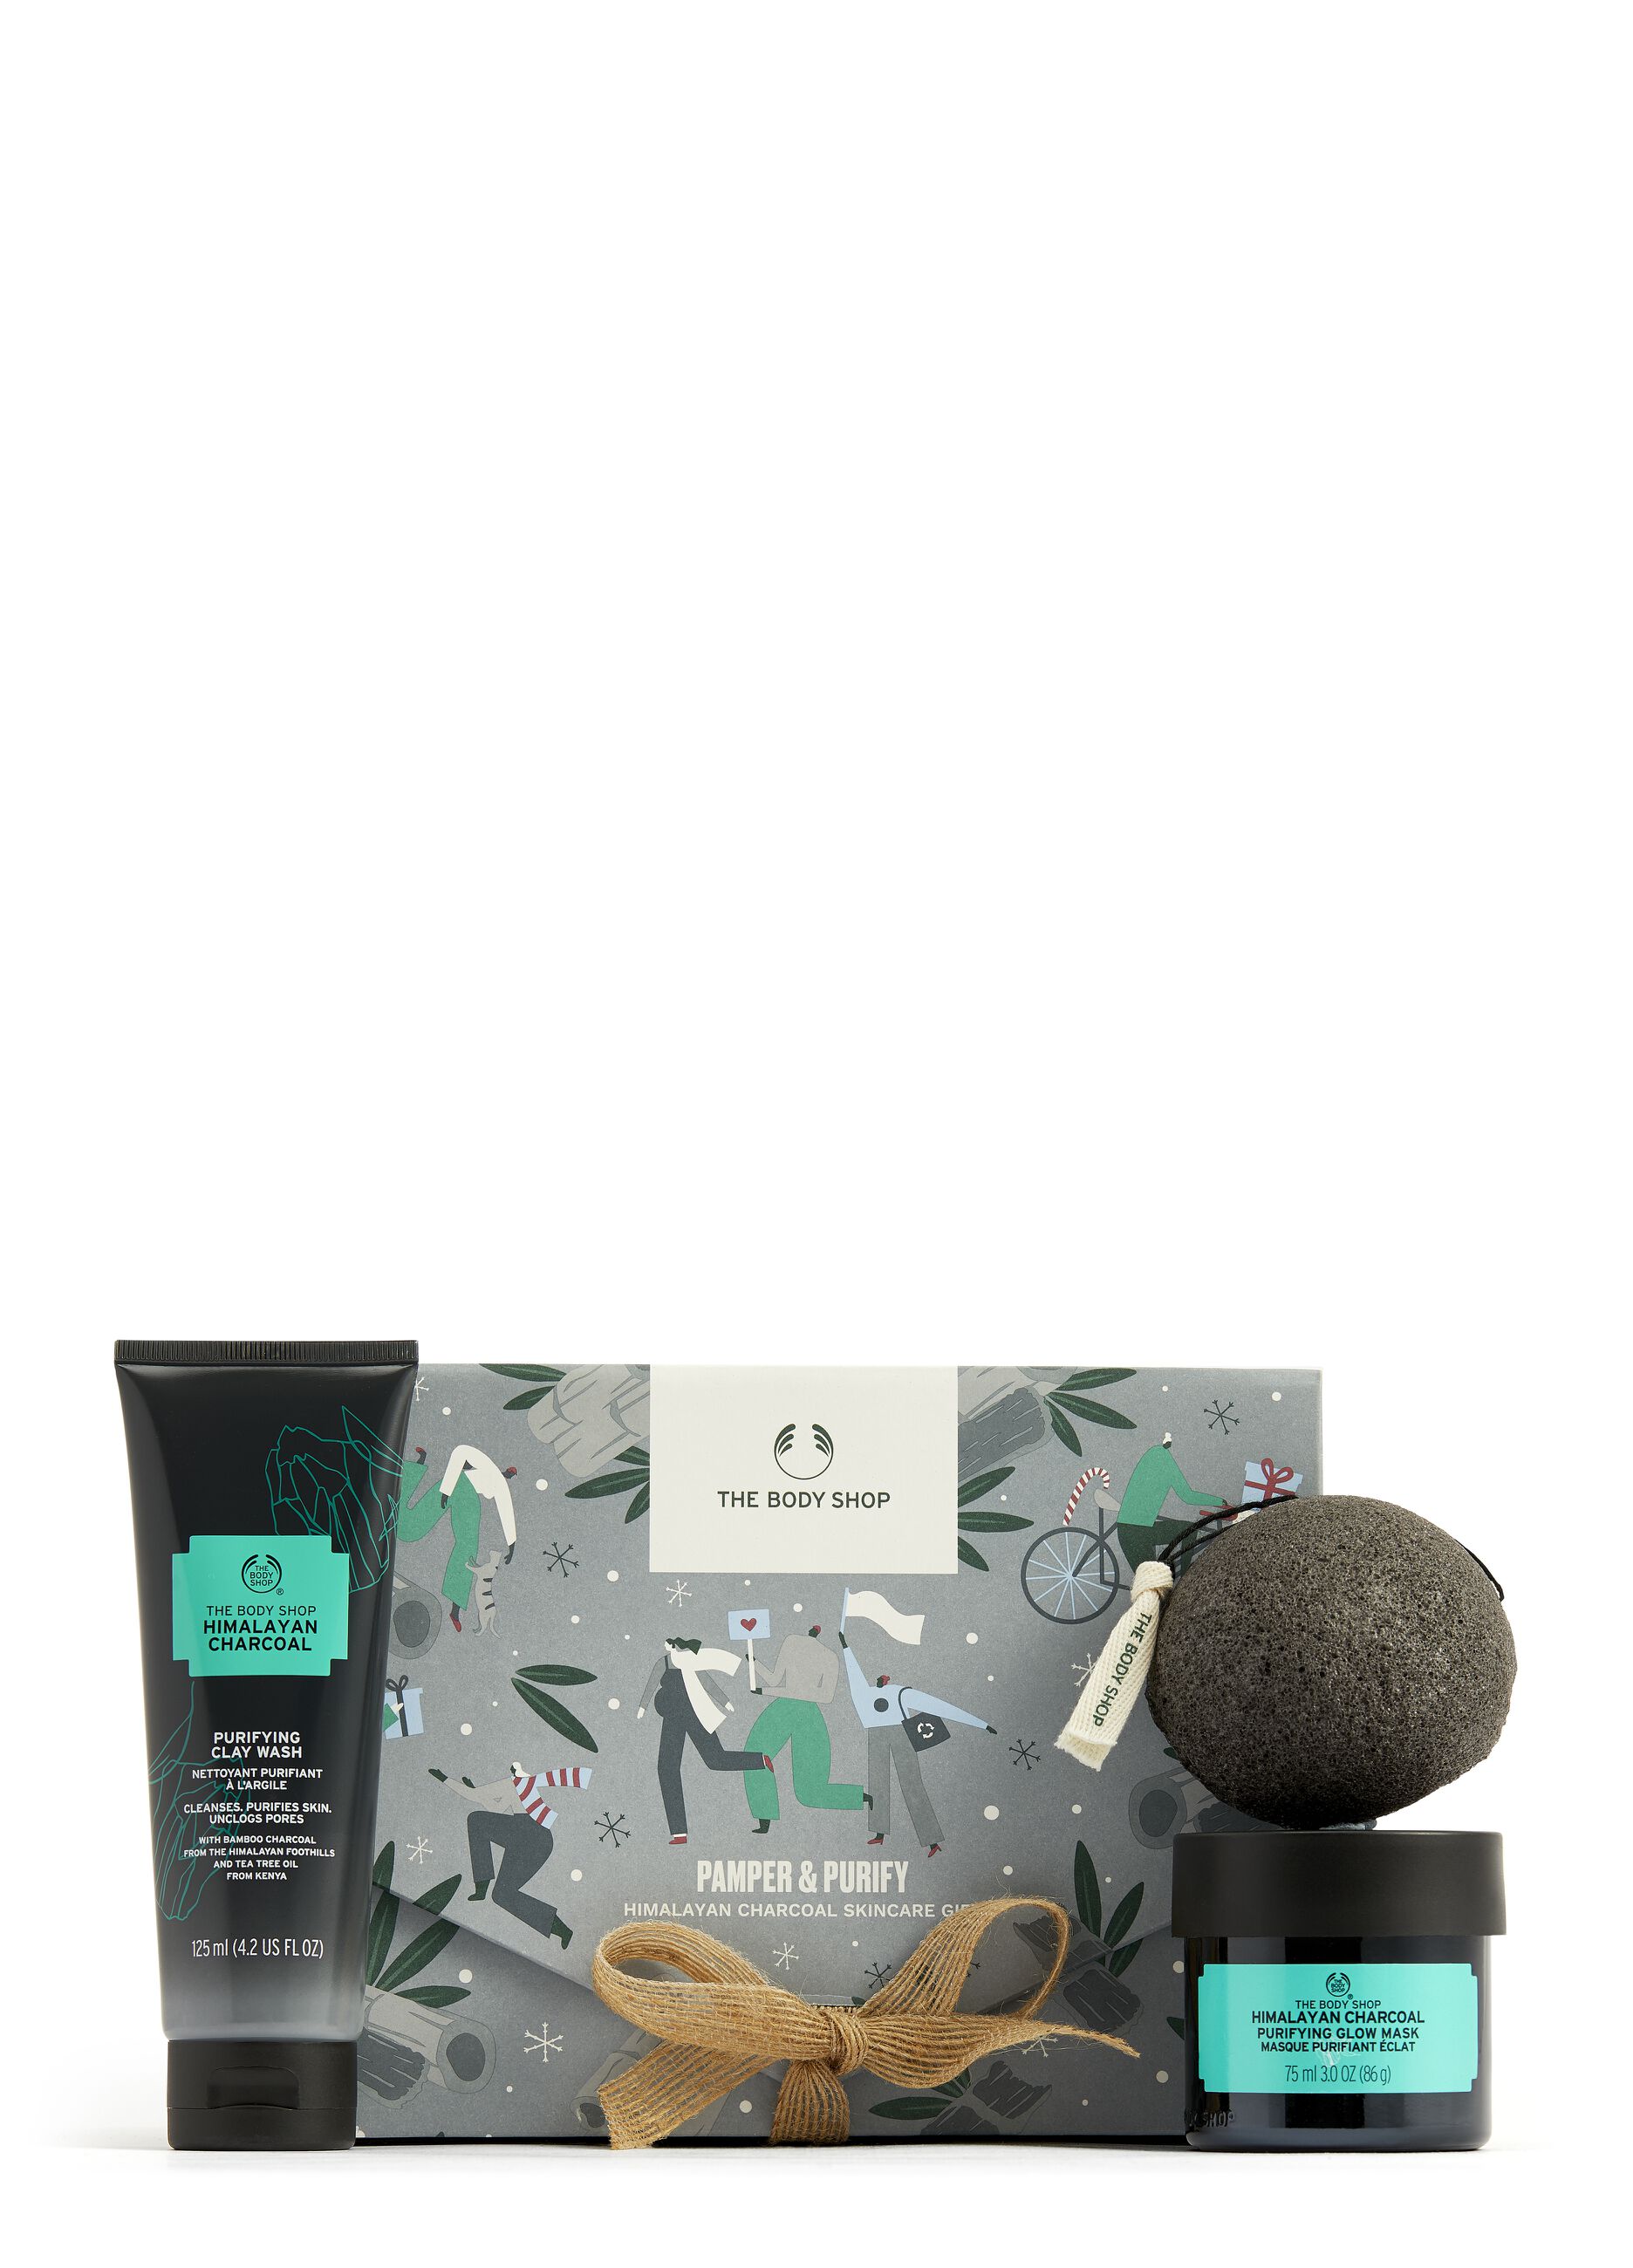 The Body Shop Himalayan charcoal gift box